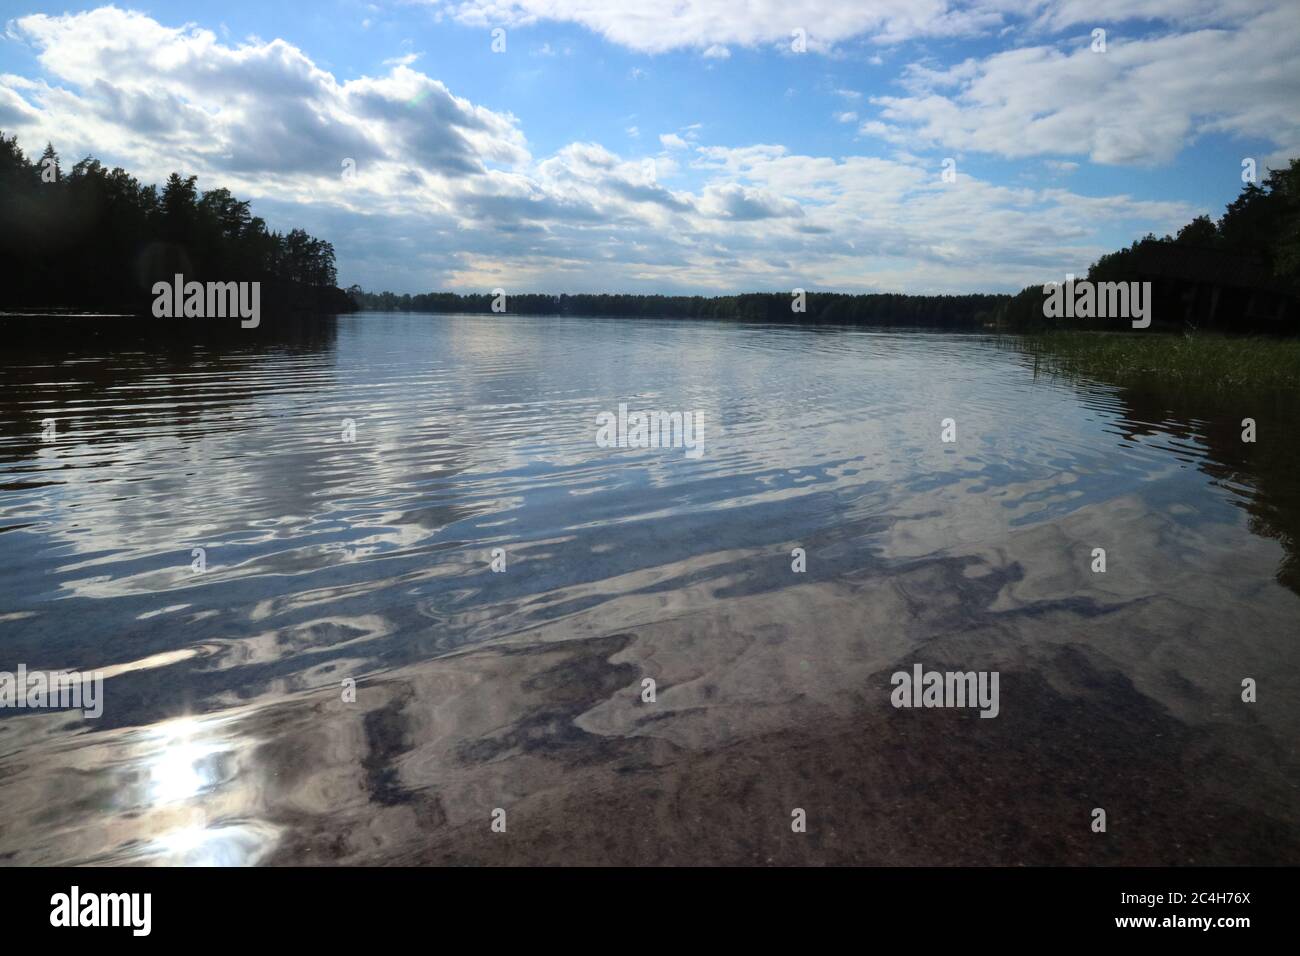 Tampaja lake in Kirkkonummi, Finland on a bright summer day Stock Photo